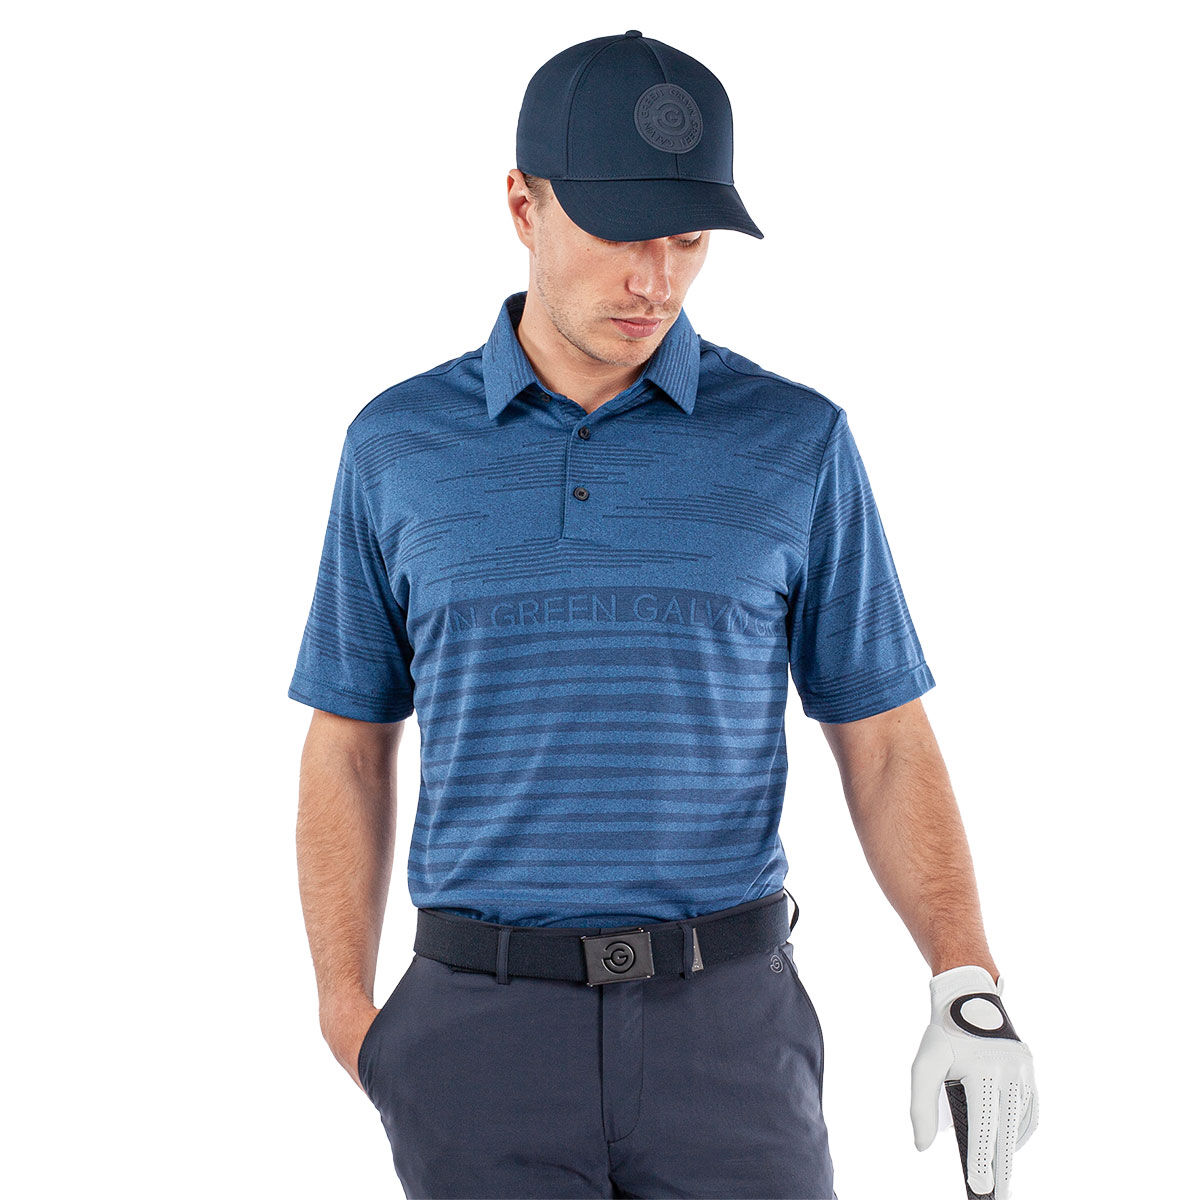 Galvin Green Men’s Maximus Golf Polo Shirt, Mens, Blue/navy, Large | American Golf